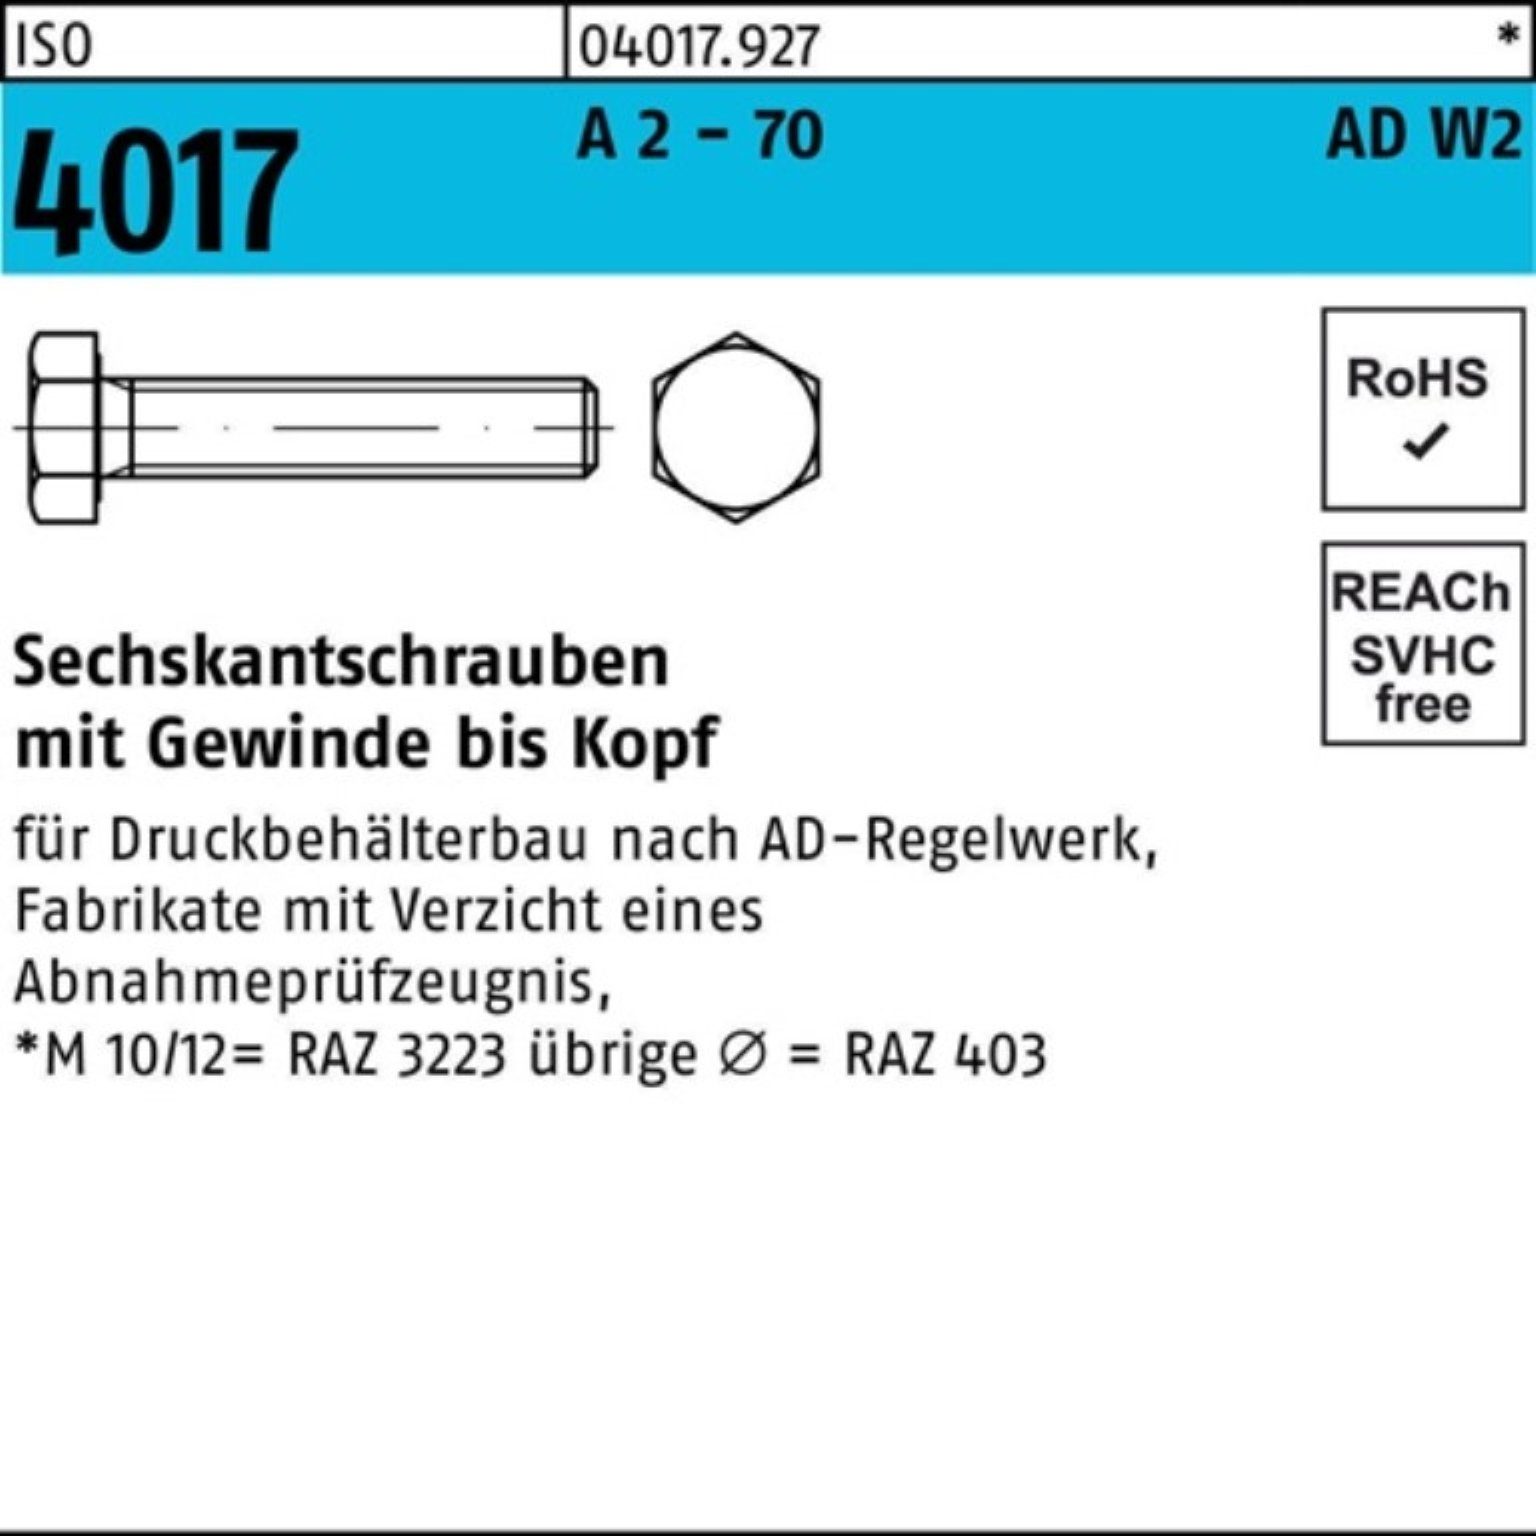 Pack 2 ISO Sechskantschraube - Bufab Sechskantschraube 70 70 50 VG M12x St 100er 4017 A AD-W2